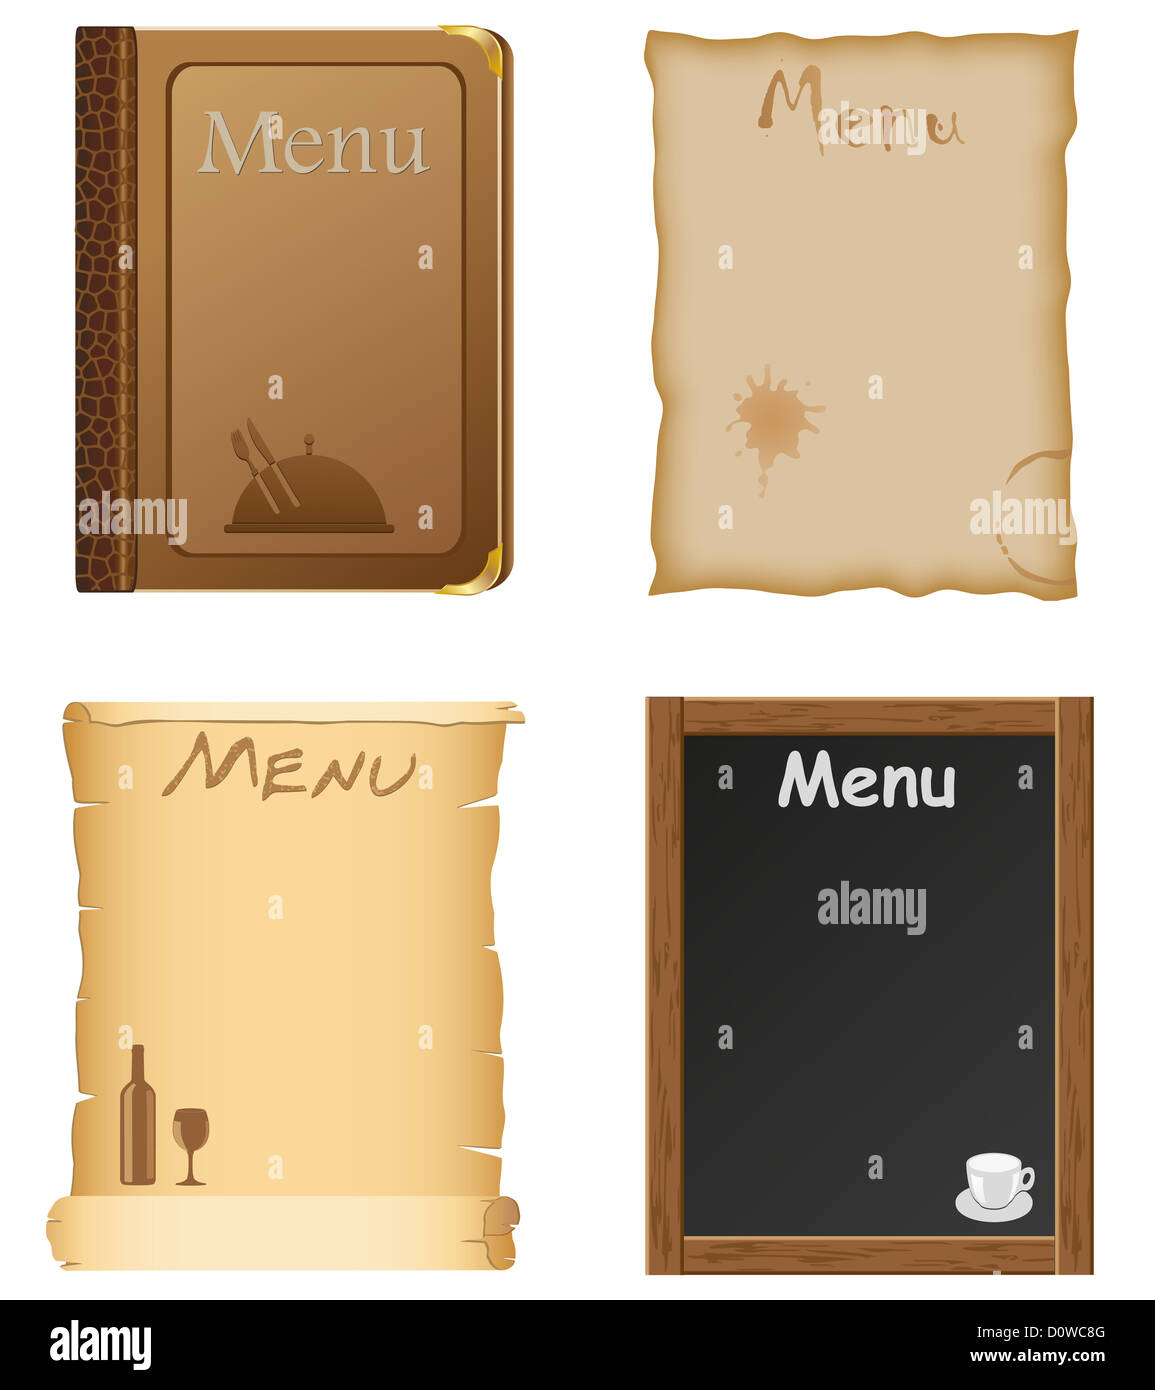 restaurant and cafe menu design illustration isolated on white background  Stock Photo - Alamy